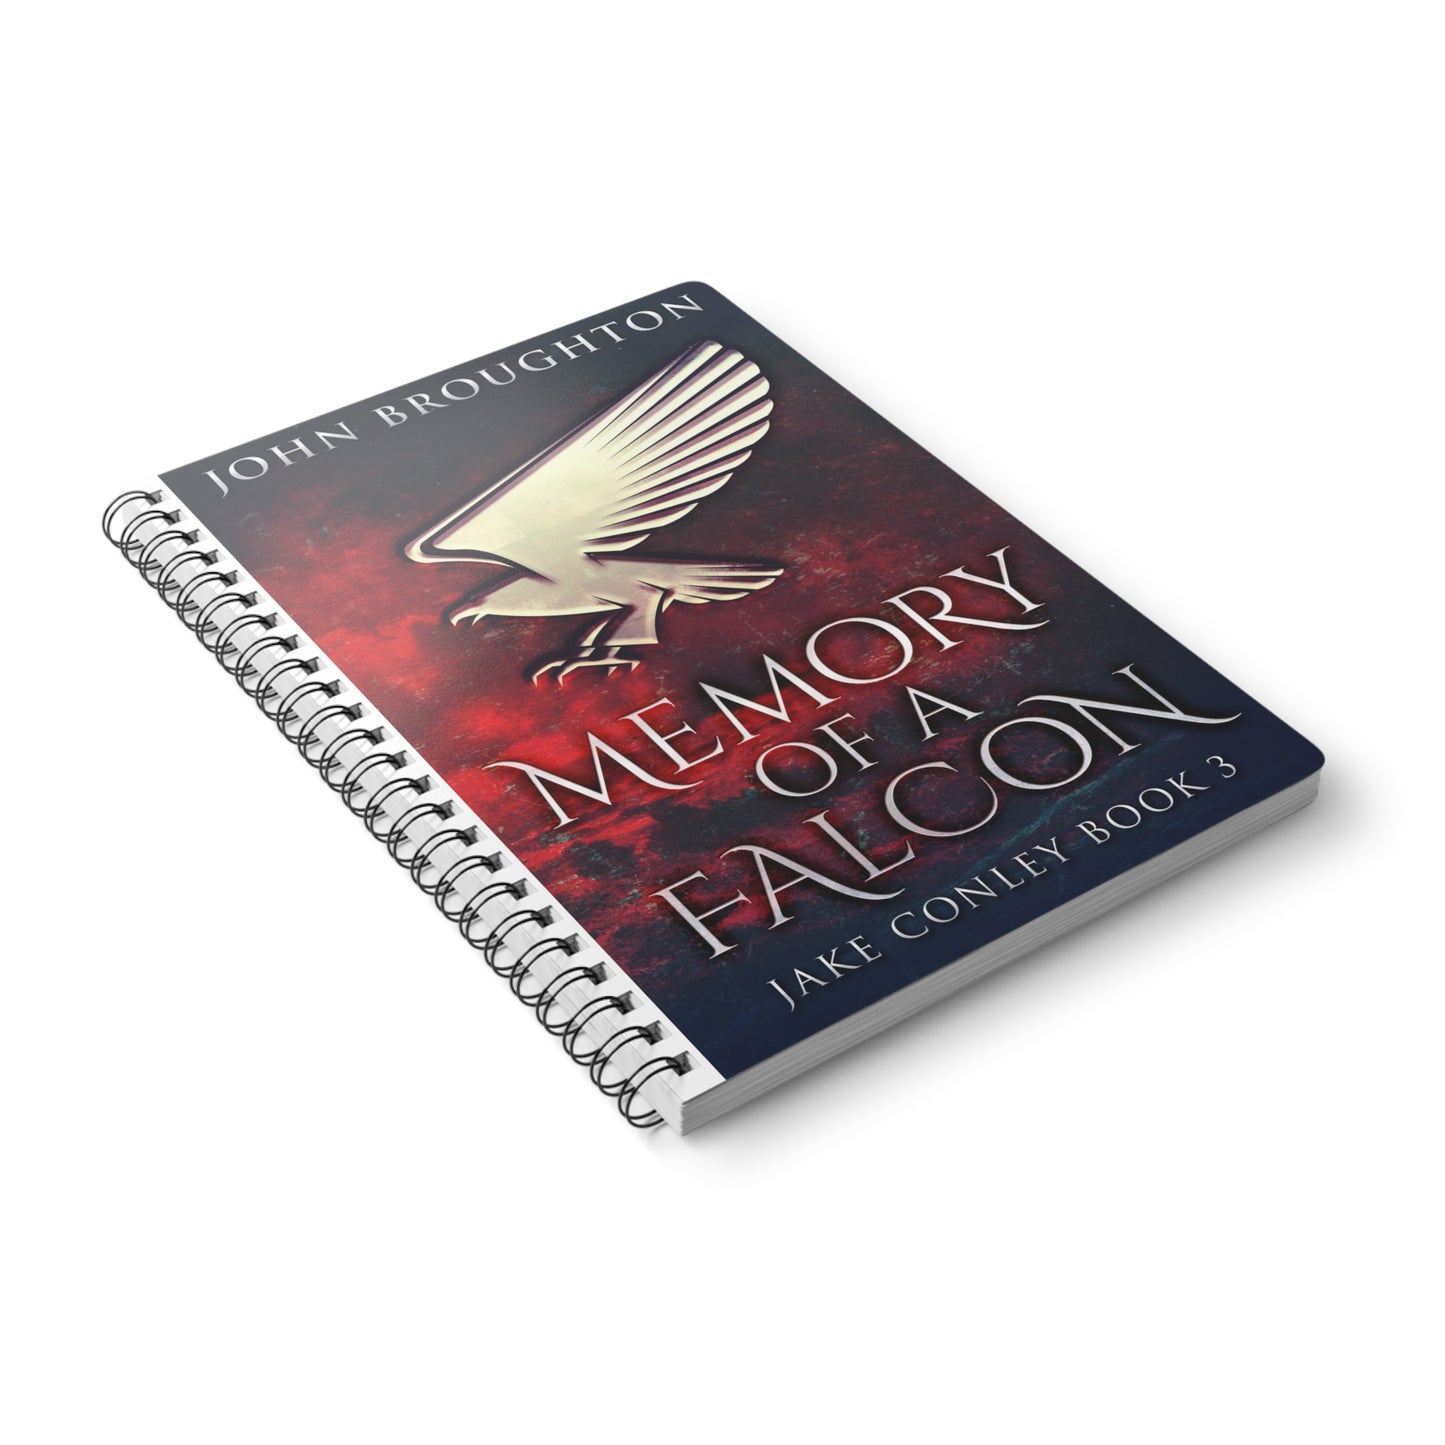 Memory Of A Falcon - A5 Wirebound Notebook